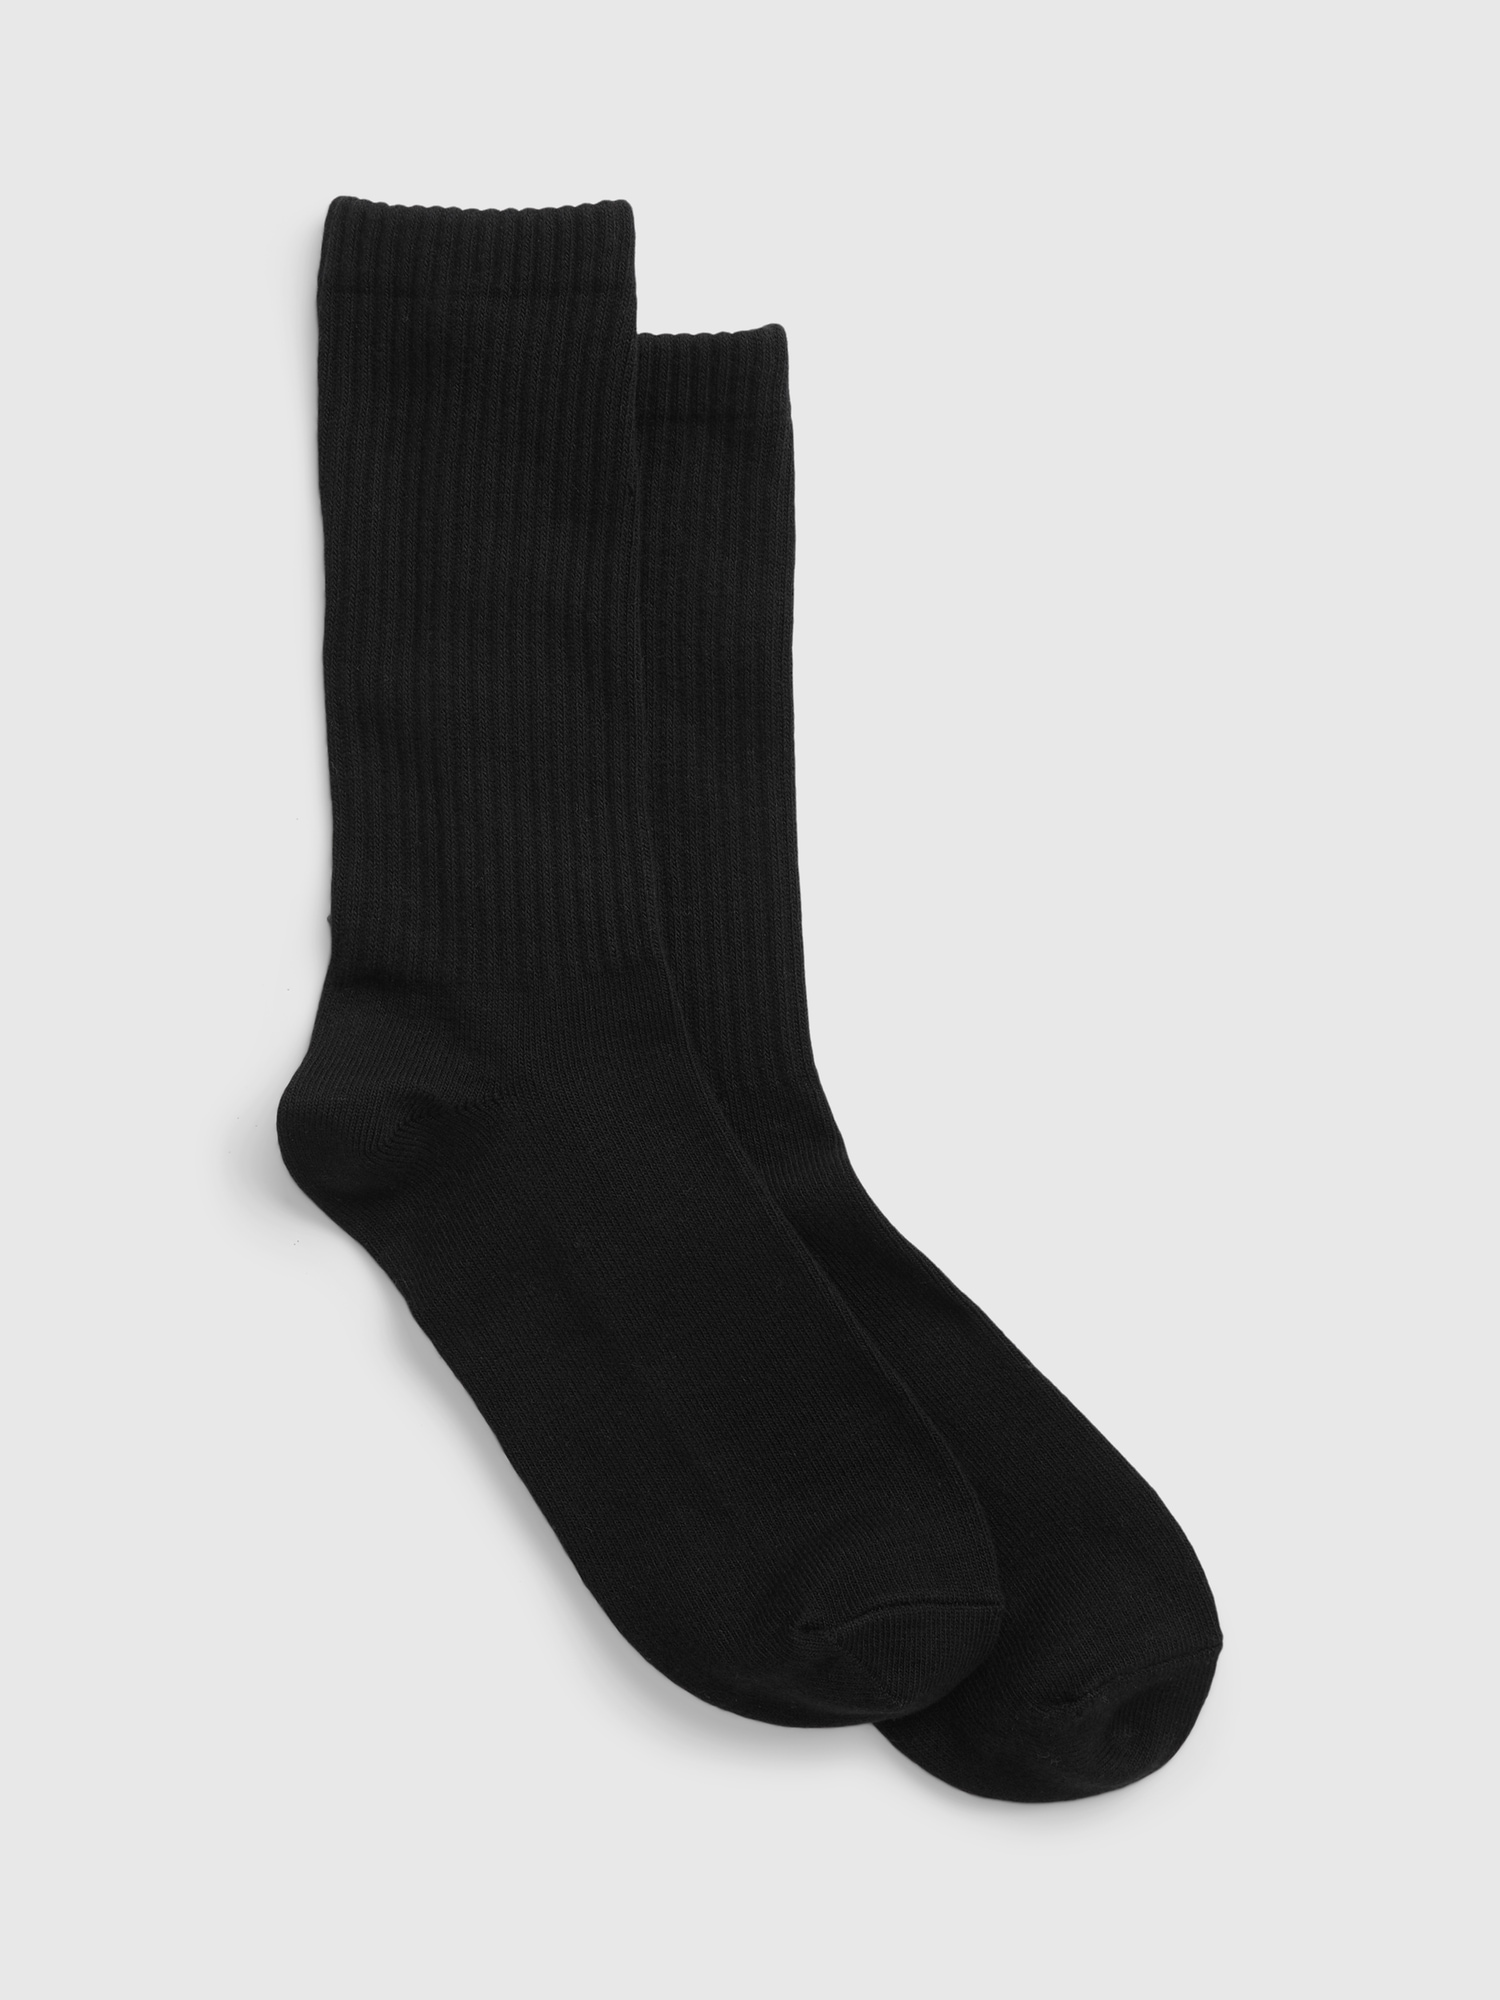 Gap Crew Socks black. 1